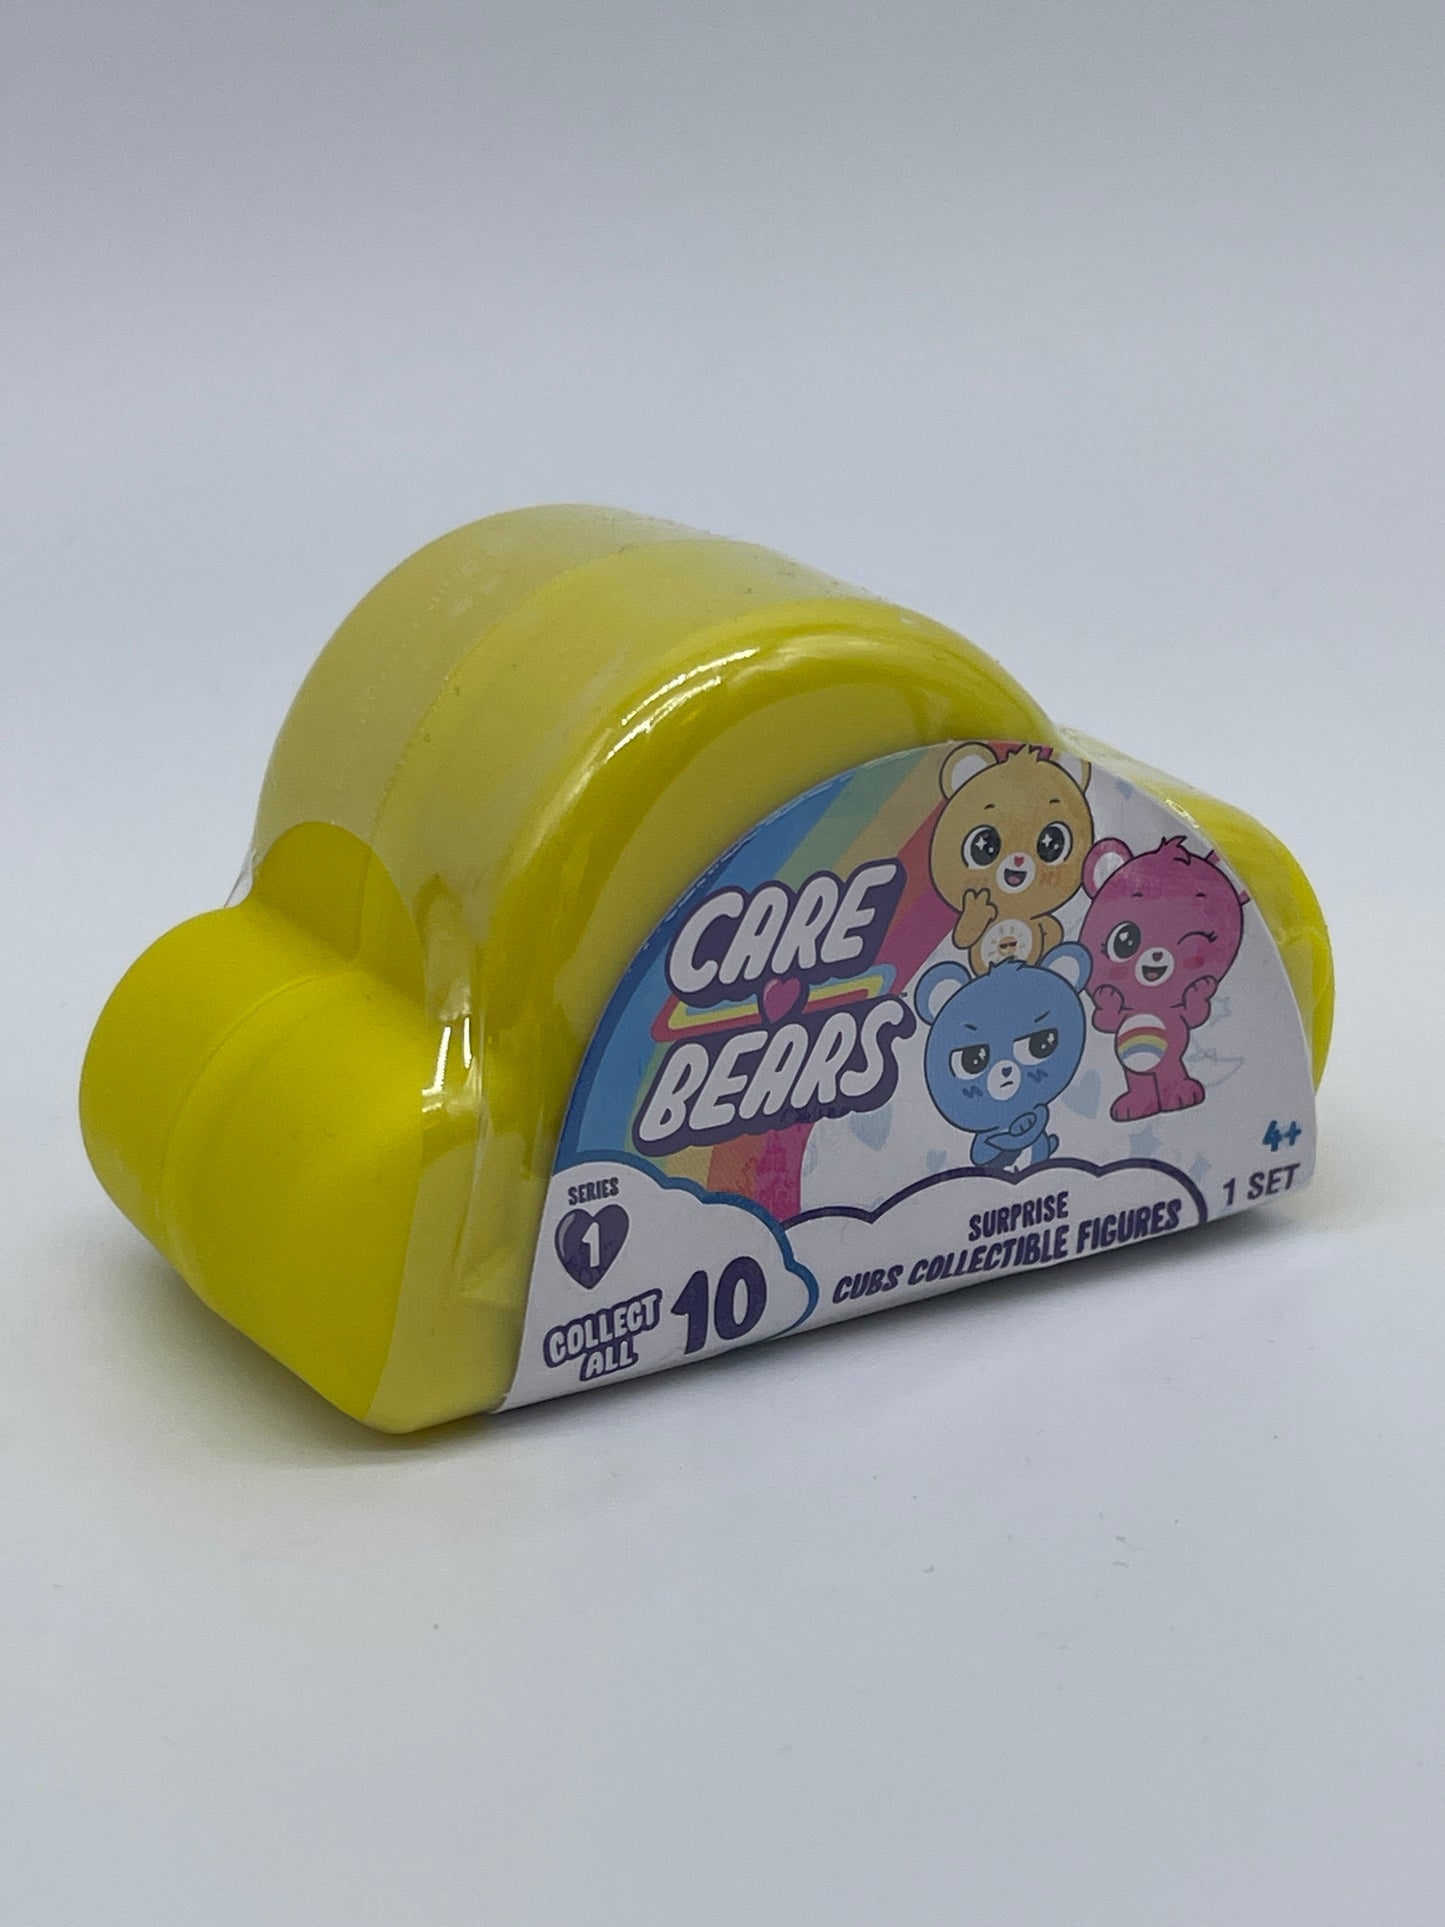 Care Bears Glücksbärchi "Surprise Cubs Collectible Figures" - Blindbox Series #1